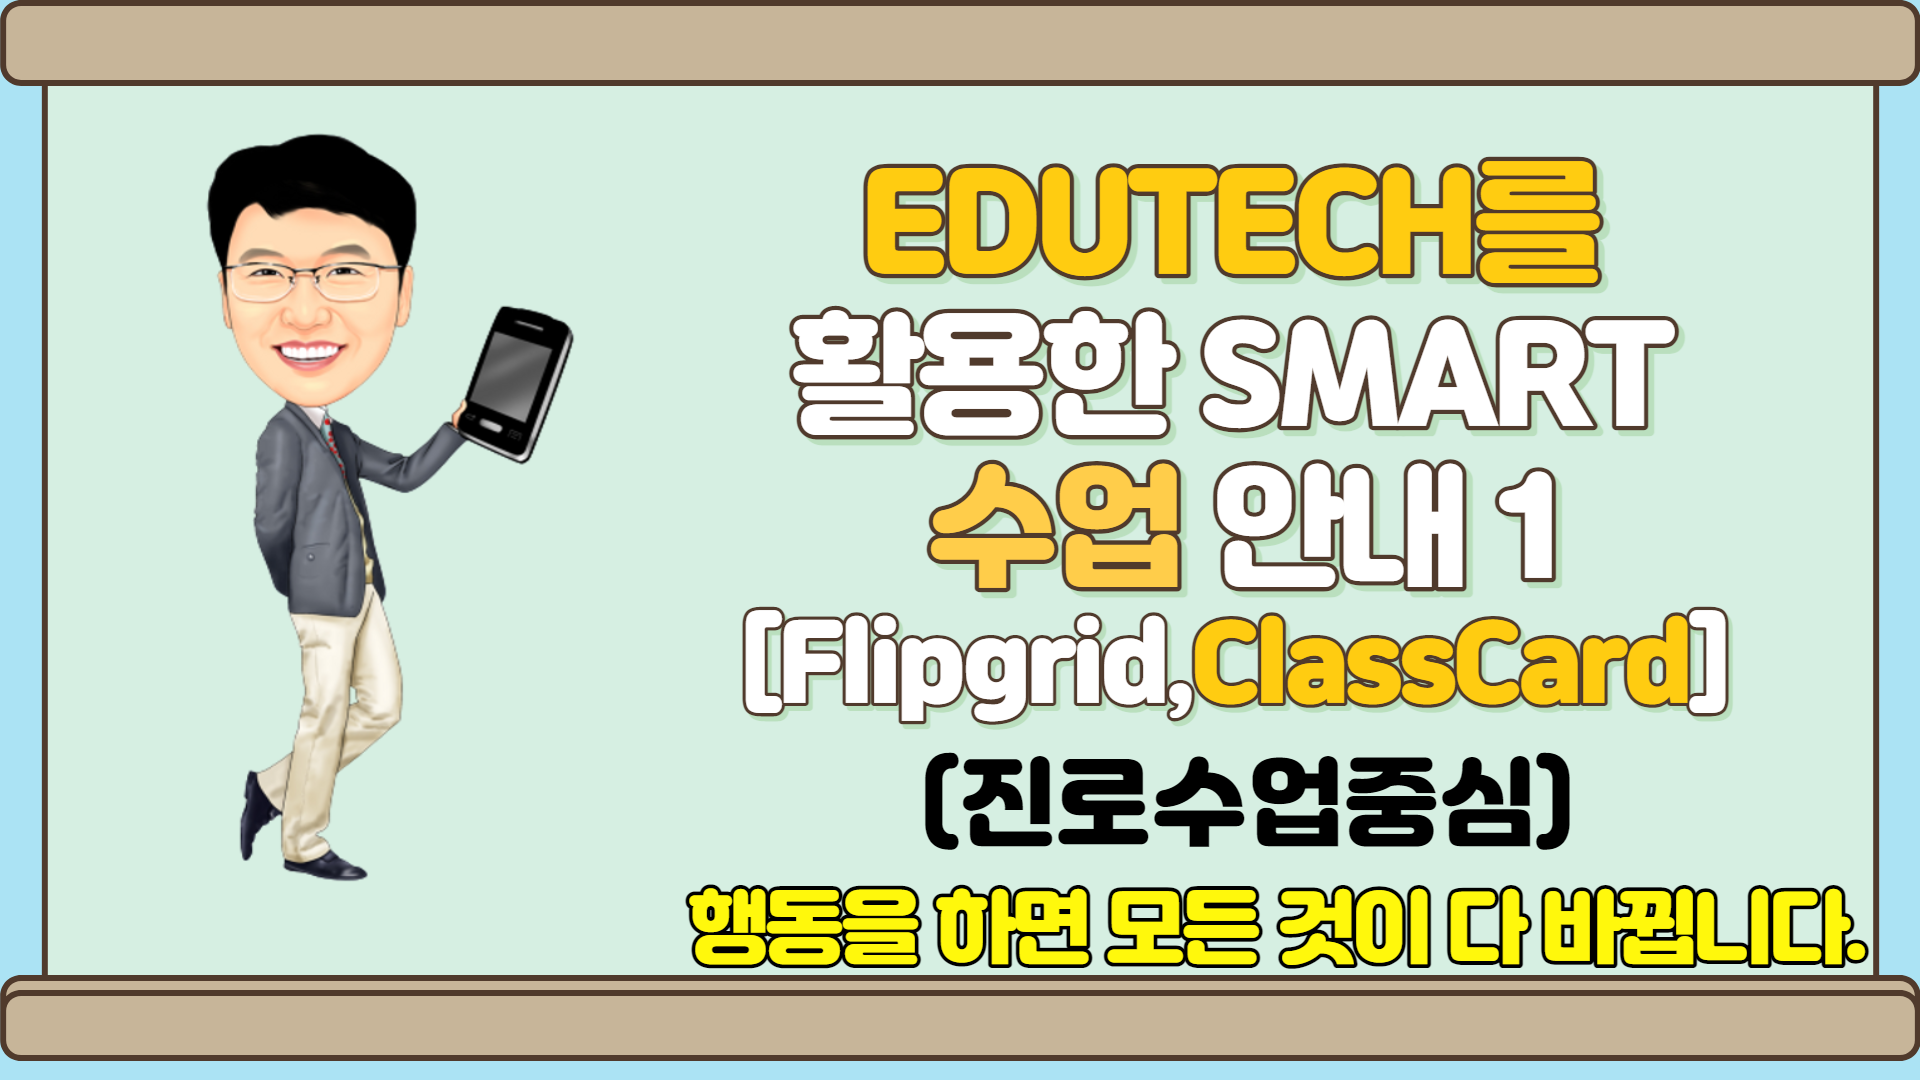 EDUTECH를 활용한 smart수업 방법 안내1 (Flipgrid,Classcard)